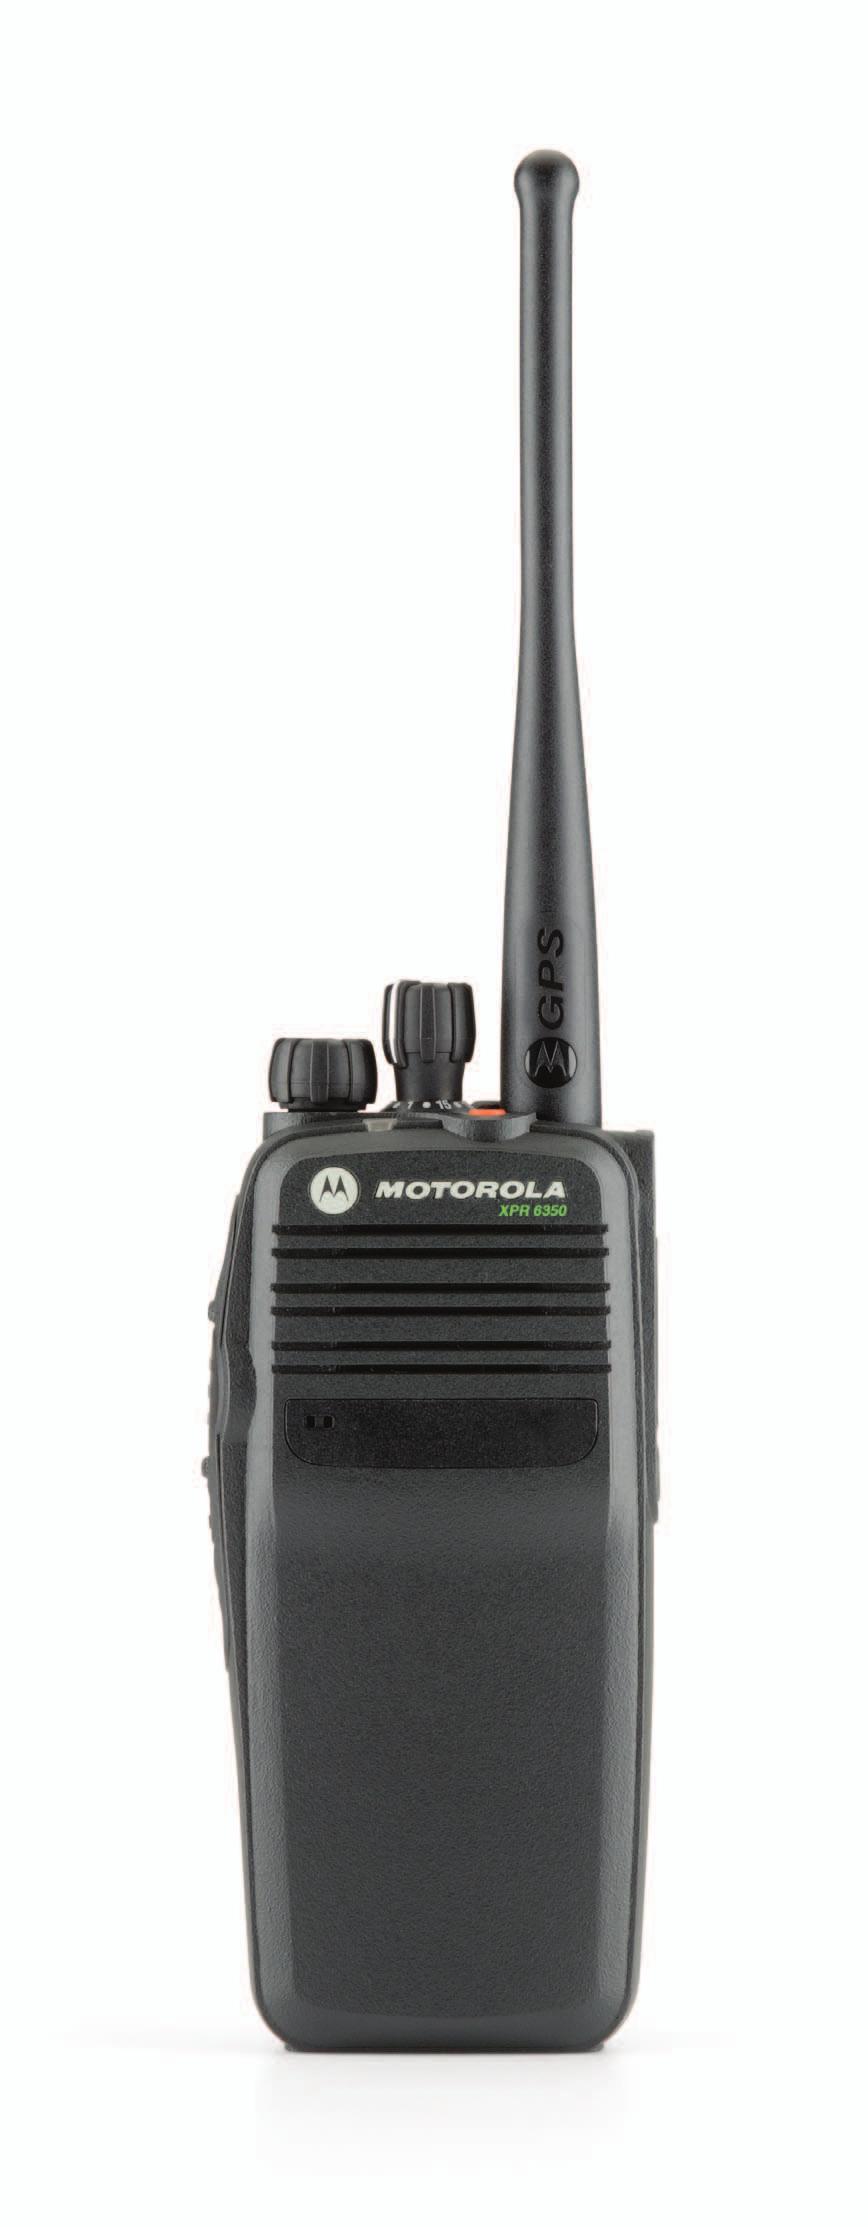 MOTOTRBO Portable Radio Specifications Display VHF/UHF Non-GPS XPR 6500 GPS XPR 6550 Non-Display VHF/UHF Non-GPS XPR 6300 GPS XPR 6350 General Specifications Display XPR 6500 / XPR 6550 Non-Display